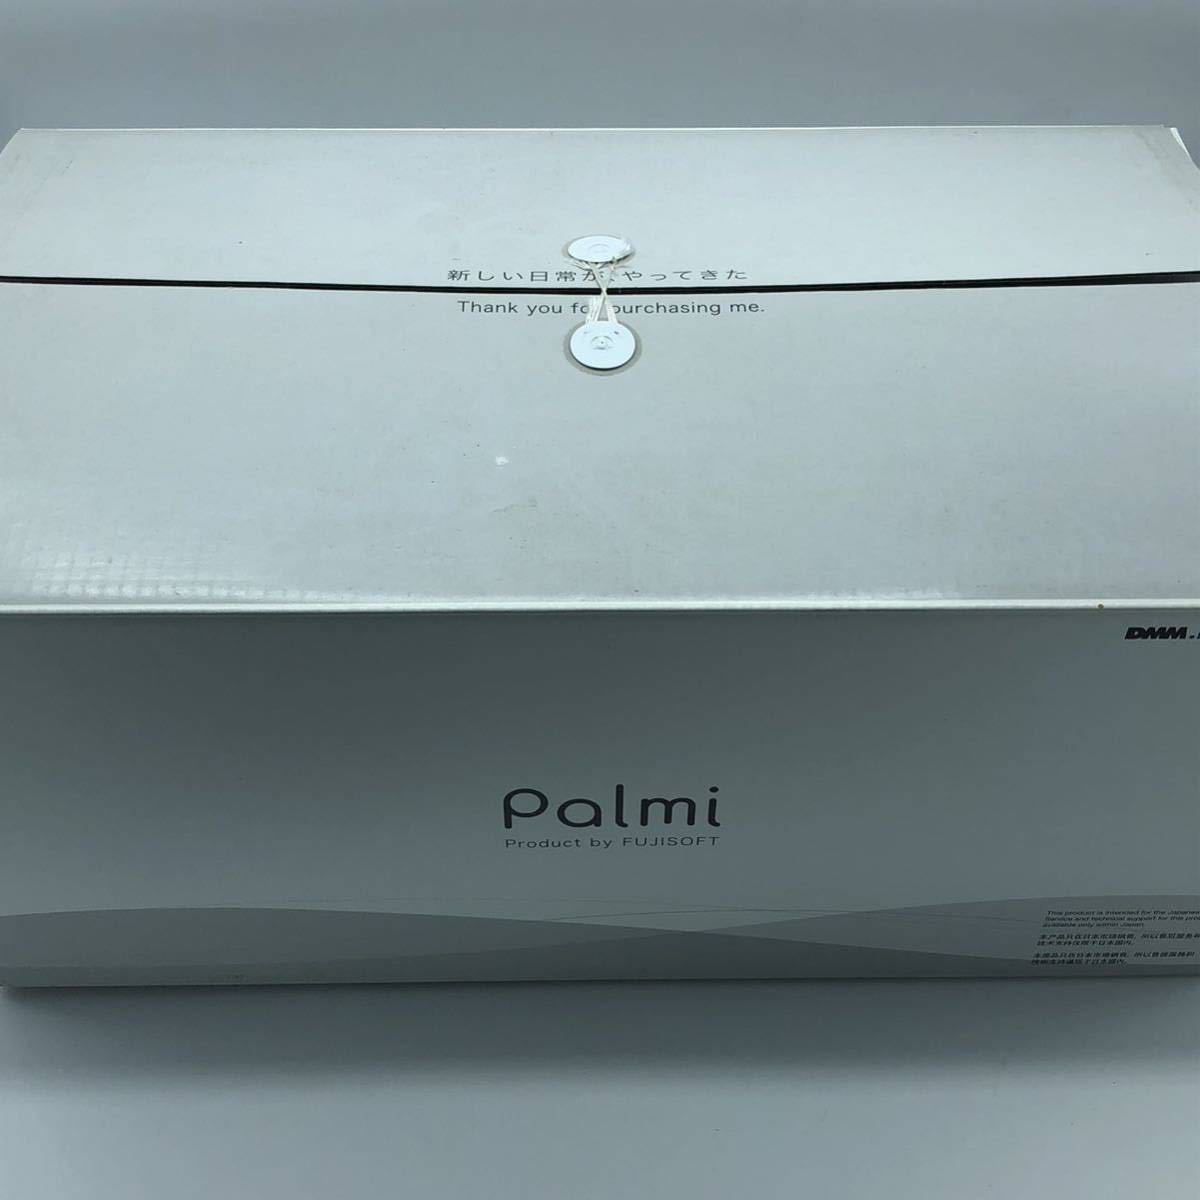 ROBOTS Palmi パルミー 二足歩行 コミュニケーション ロボット Product by FUJISOFT  PRT-D004JW 未使用品